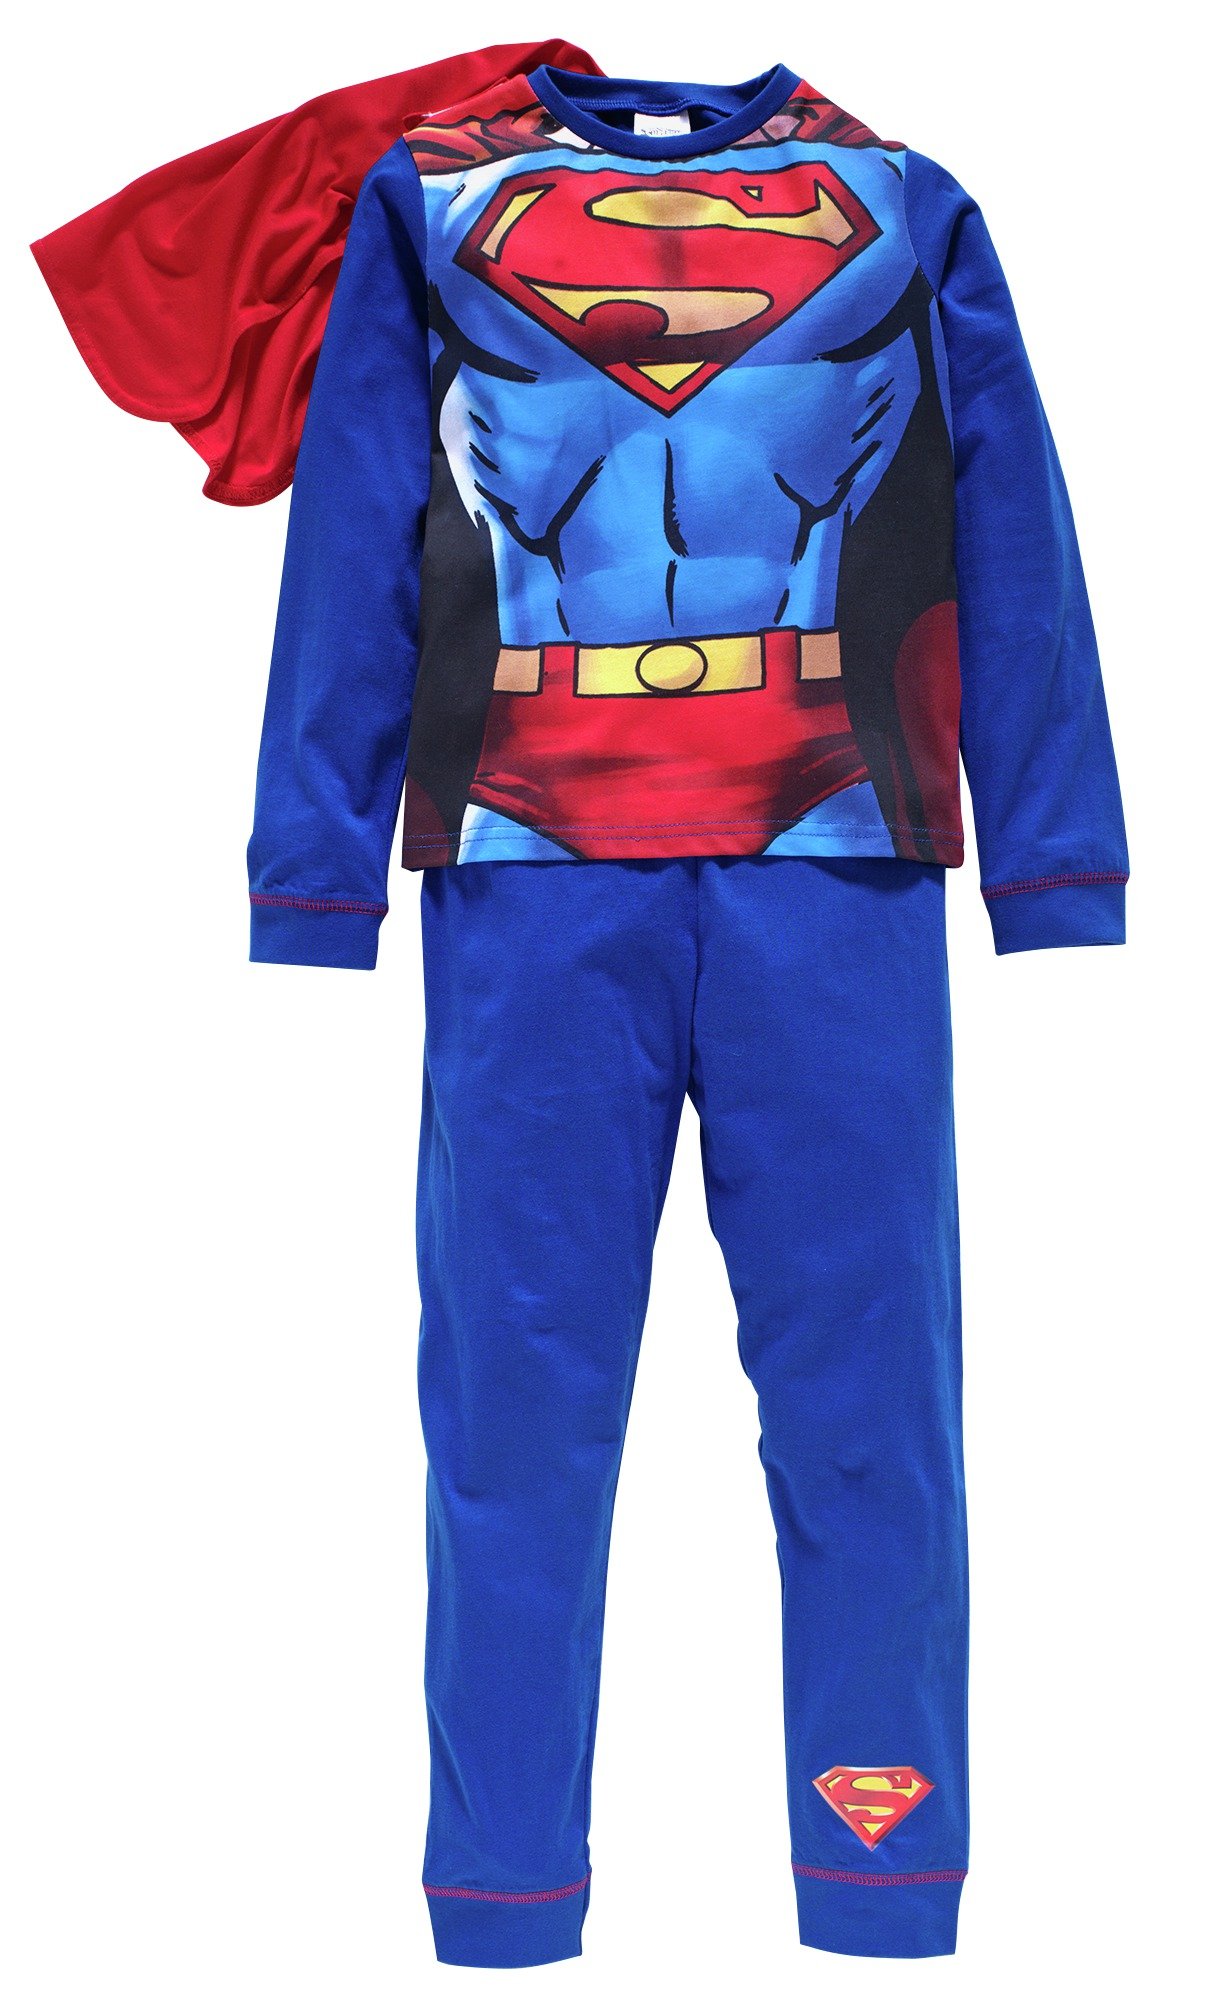 Superman Novelty Pyjamas with Cape - 2-3 Years